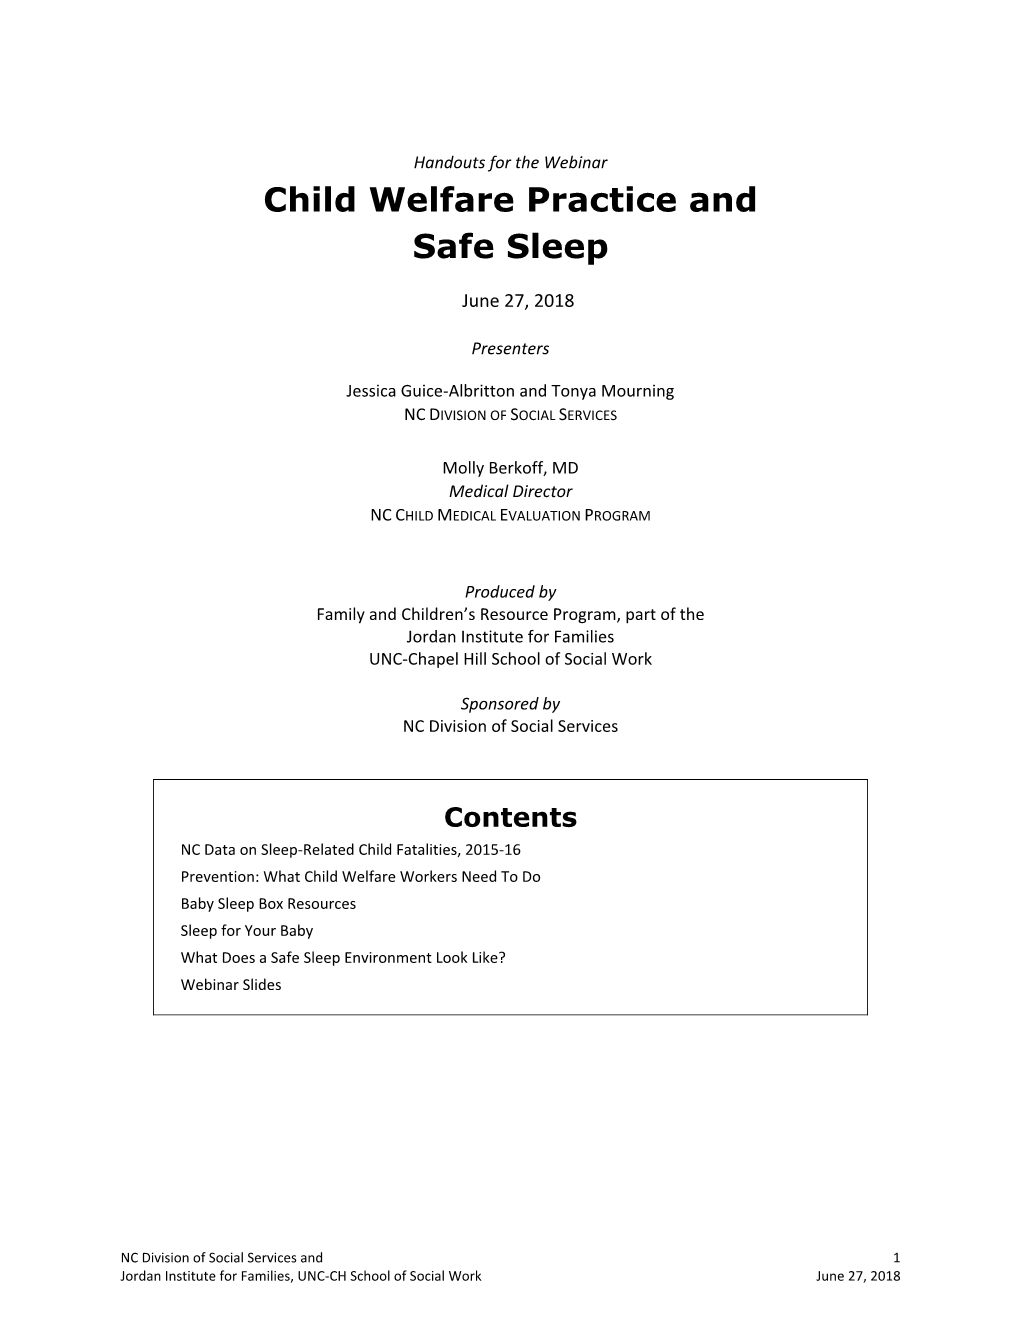 Child Welfare Practice and Safe Sleep